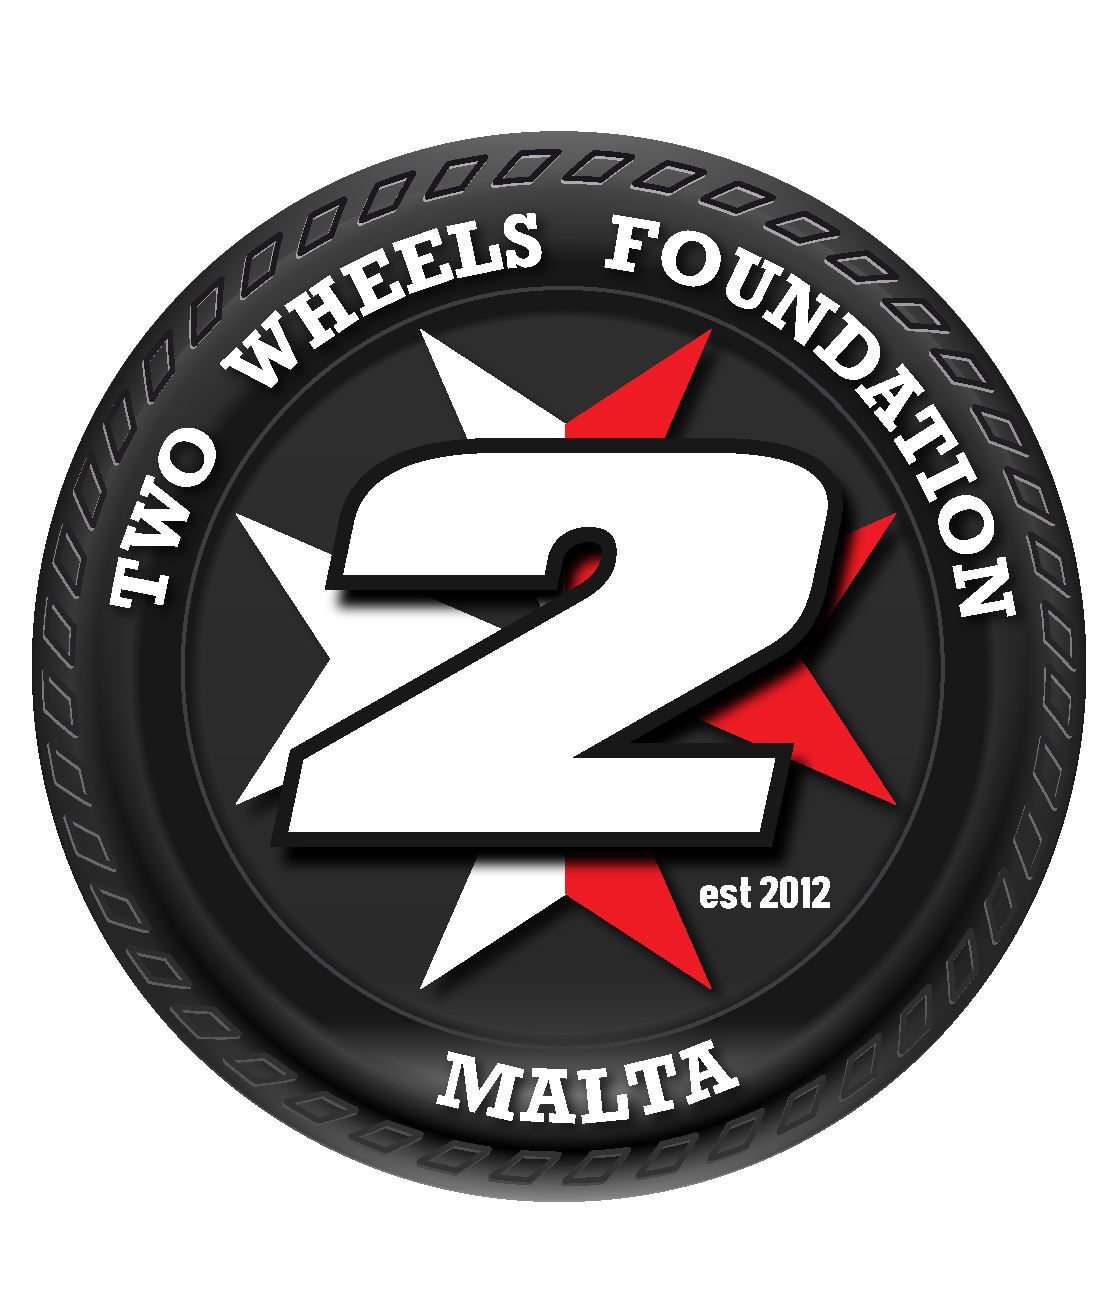 Two Wheels Foundation